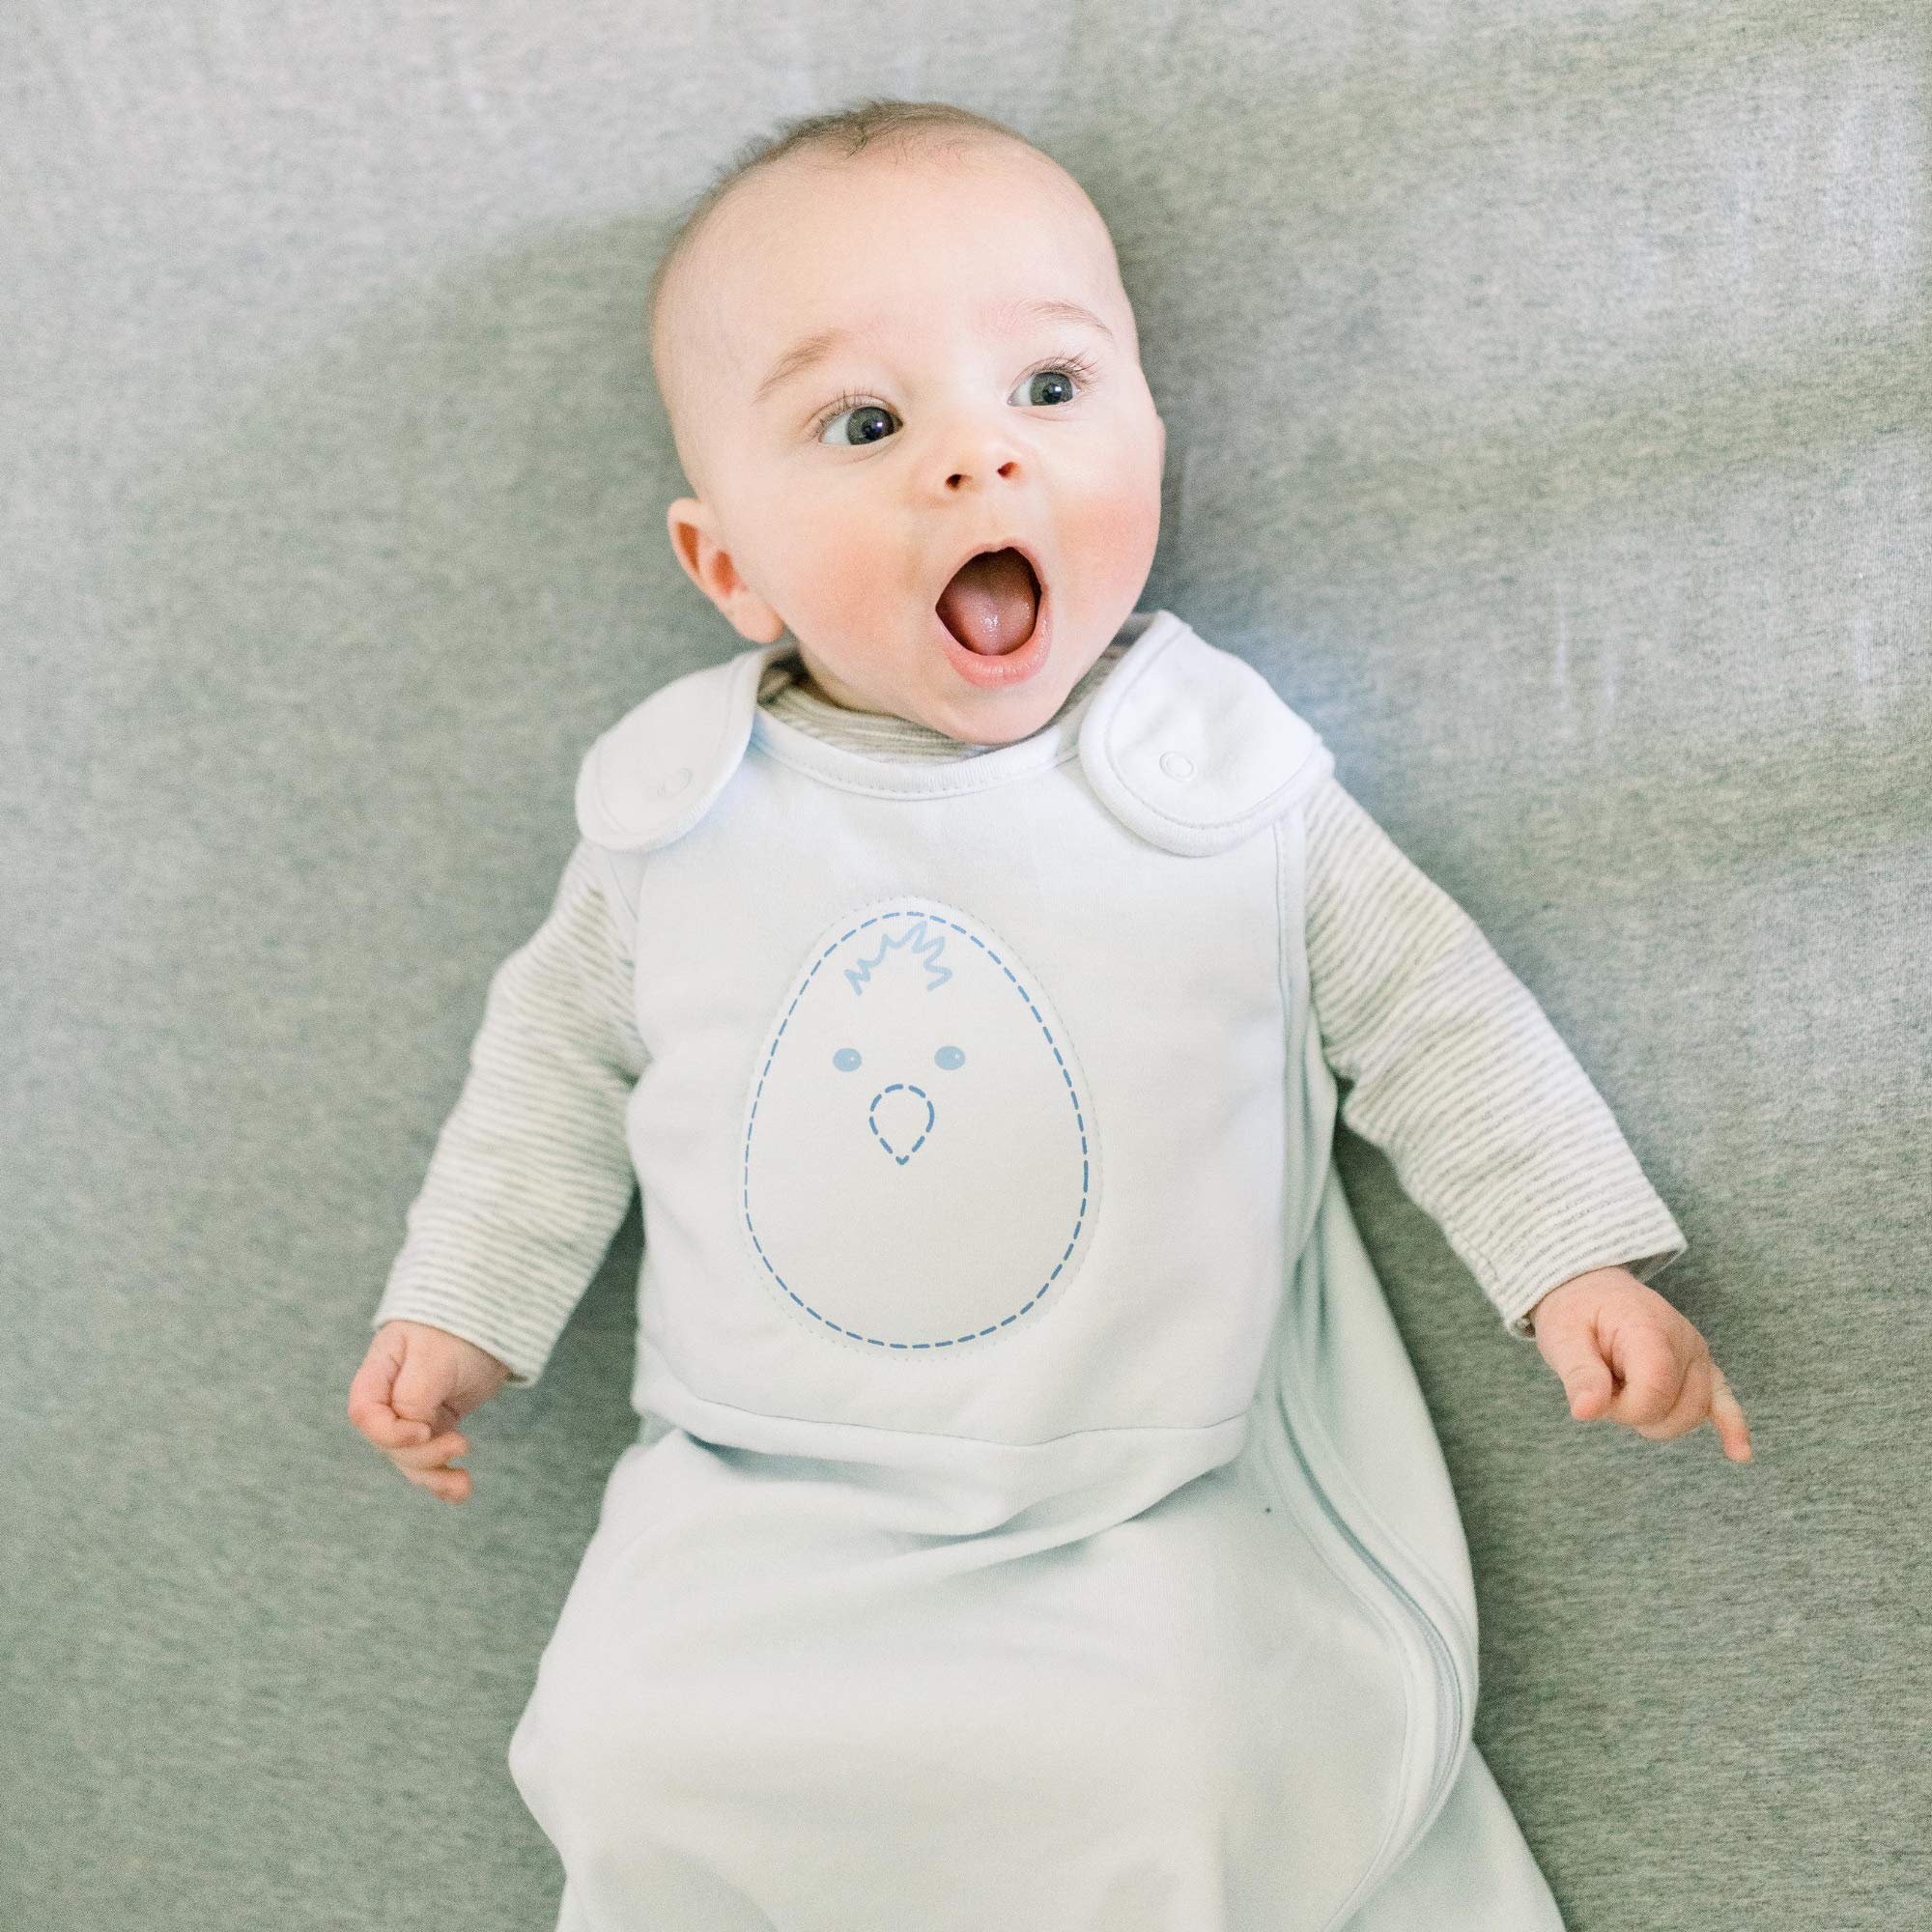 Nested Bean Zen Sack - Gently Weighted Sleep Sacks | Baby: 6-15 Months | Cotton 100% | Help Newborn/Infant Swaddle Transition | 2-Way Zipper | Machine Washable